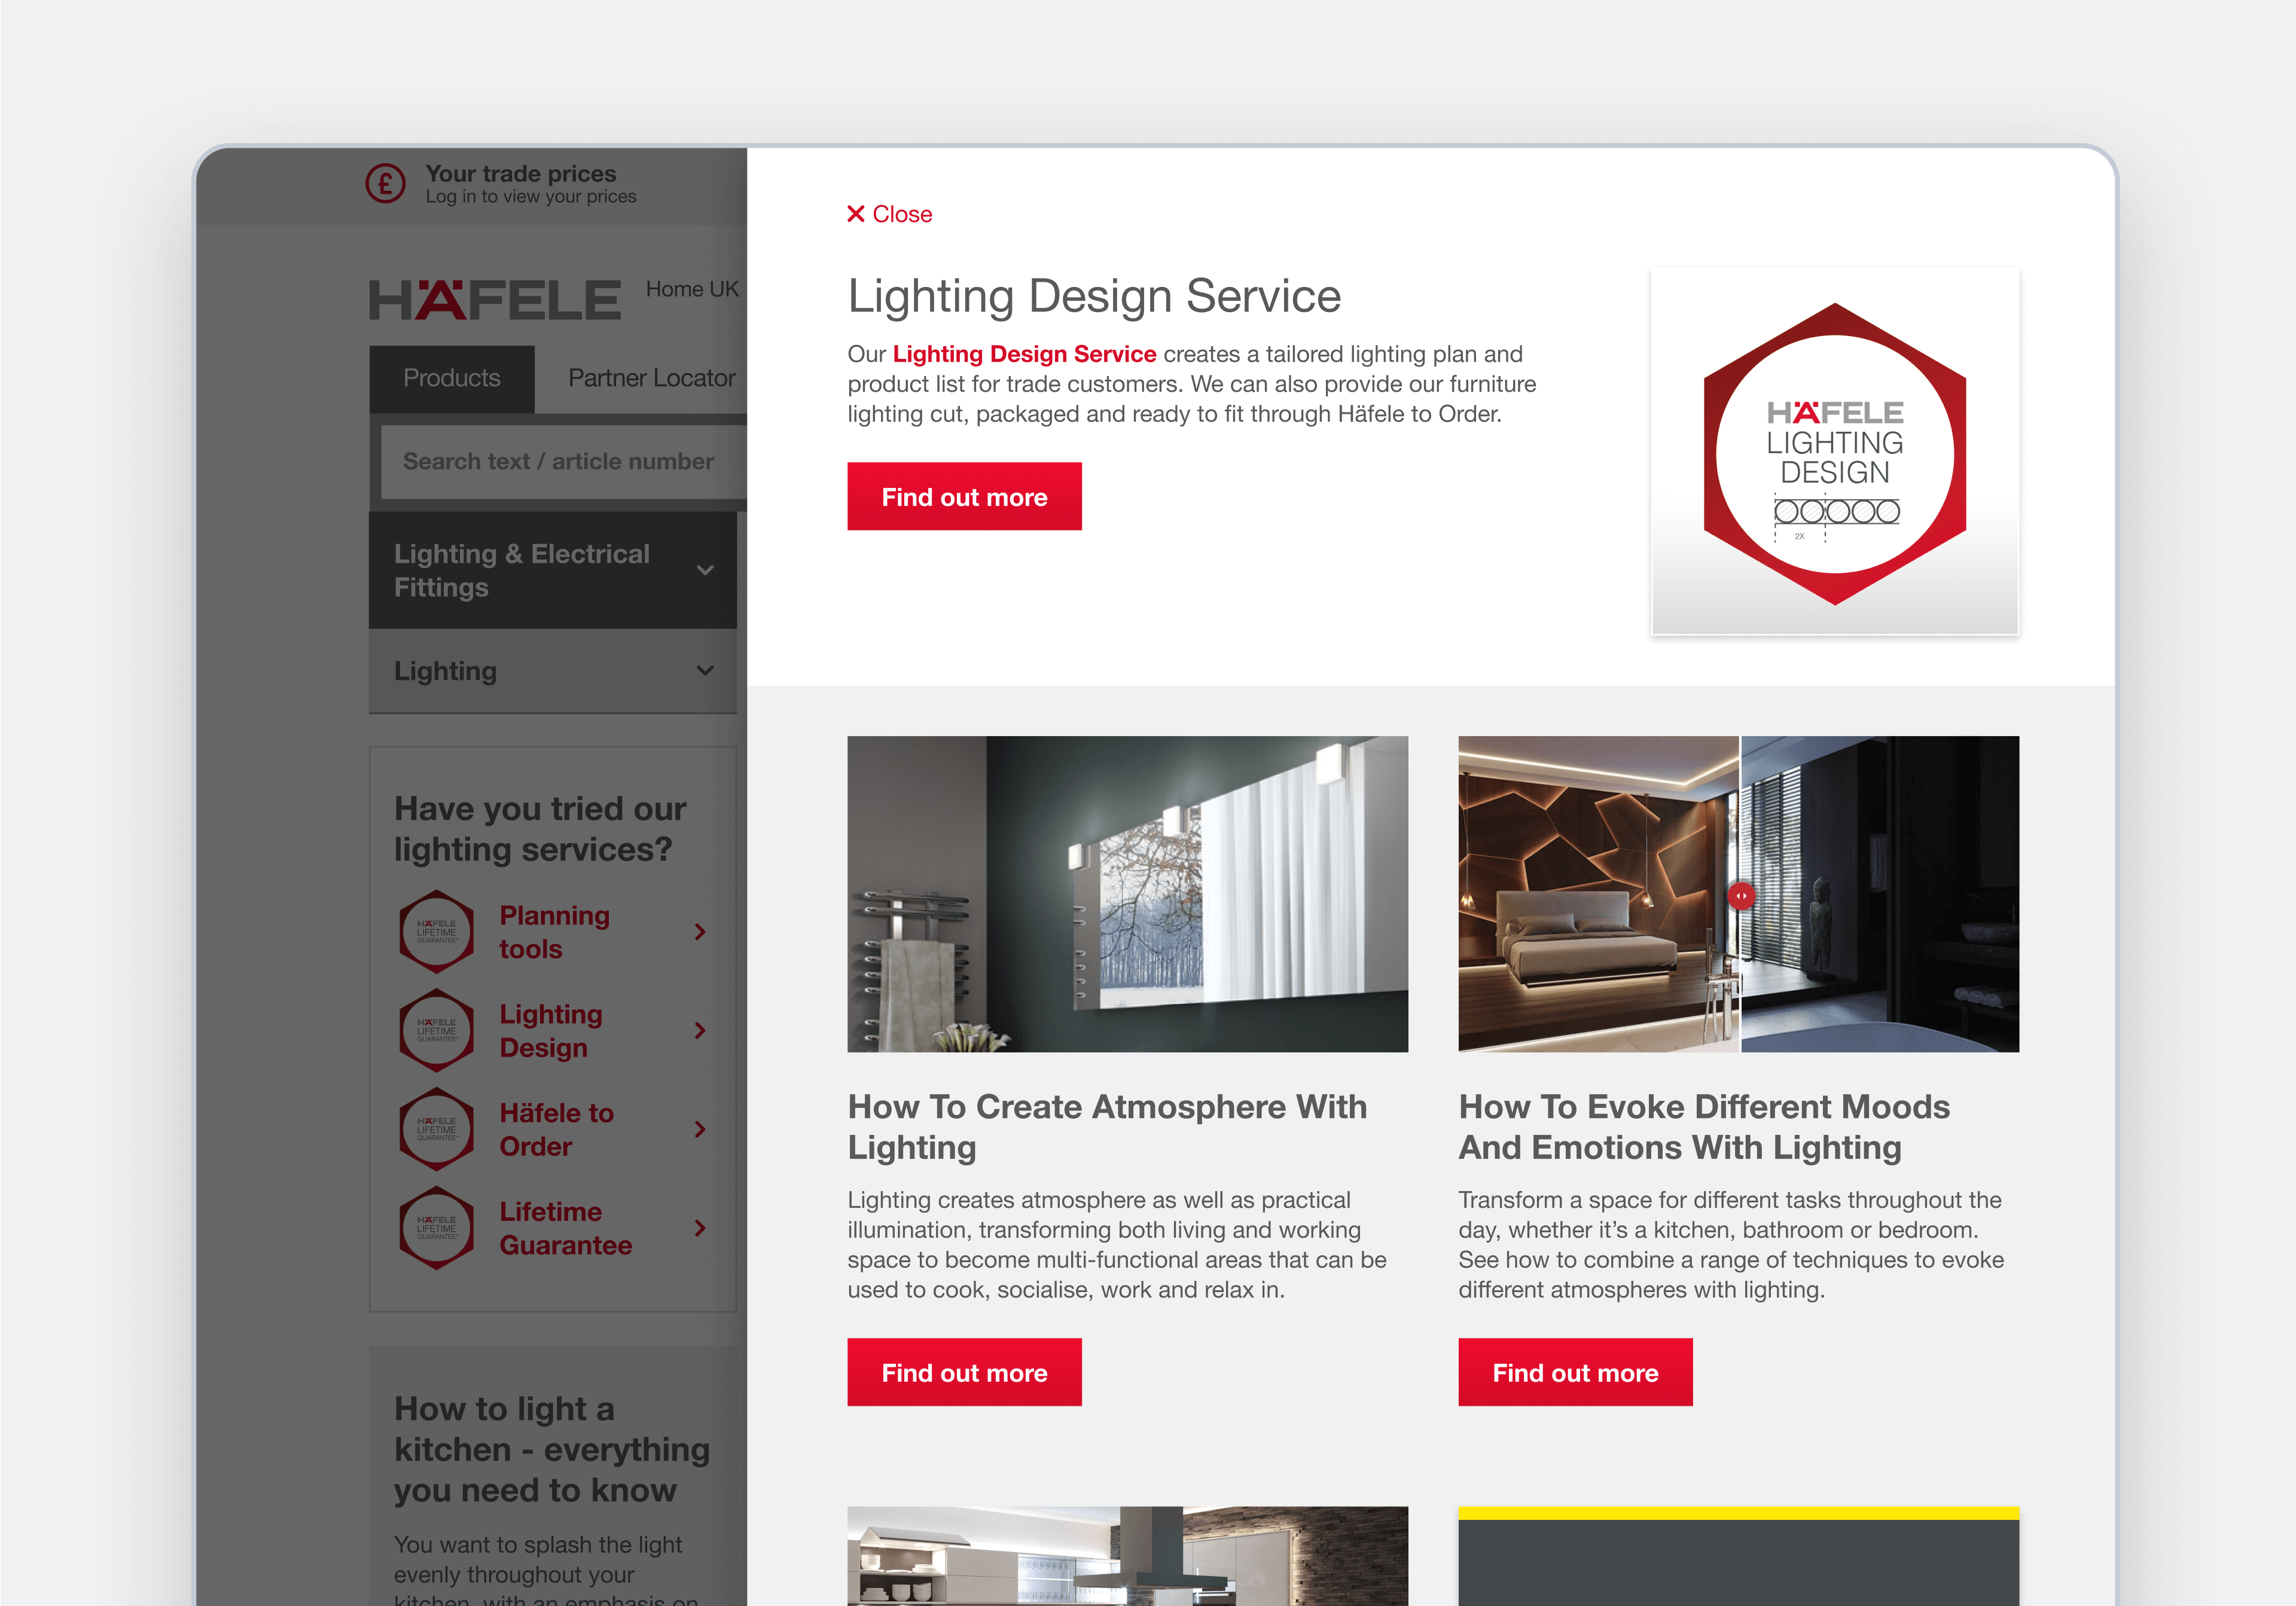 A lighting design services content modal experiment for Häfele UK desktop website